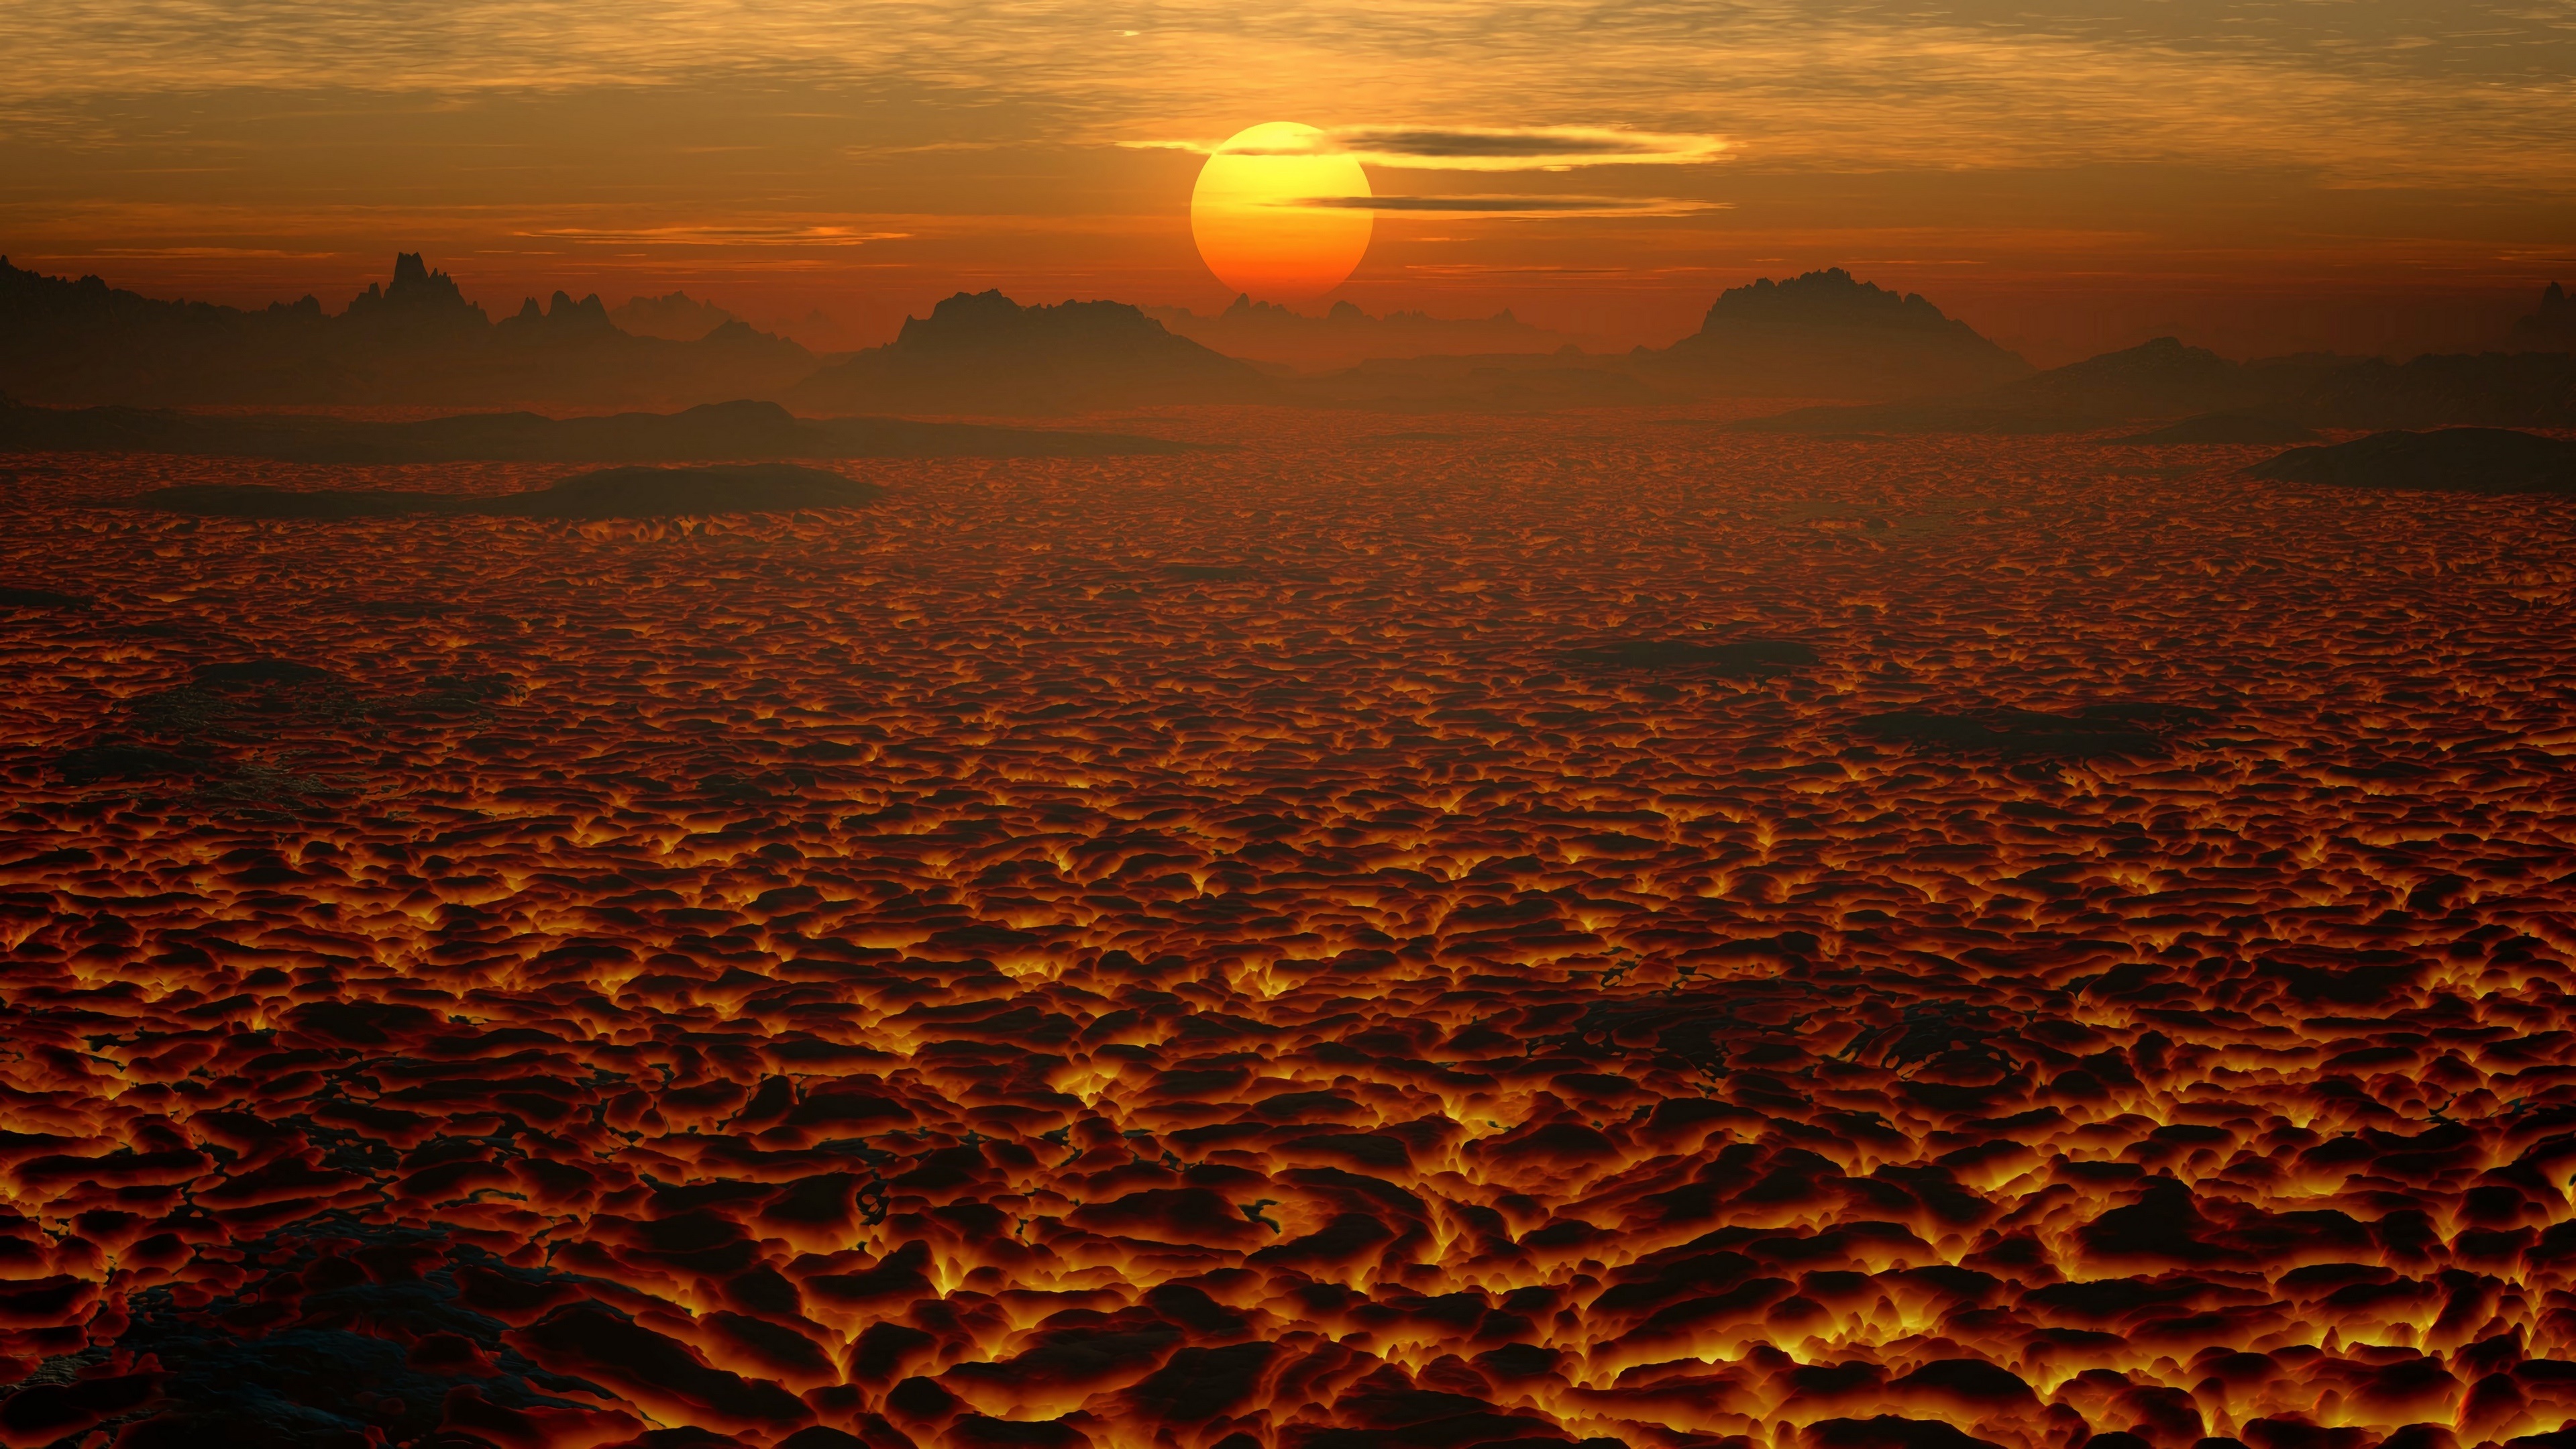 Desert Sunset Realistic Background Desert Sunset Desertification  Background Image And Wallpaper for Free Download